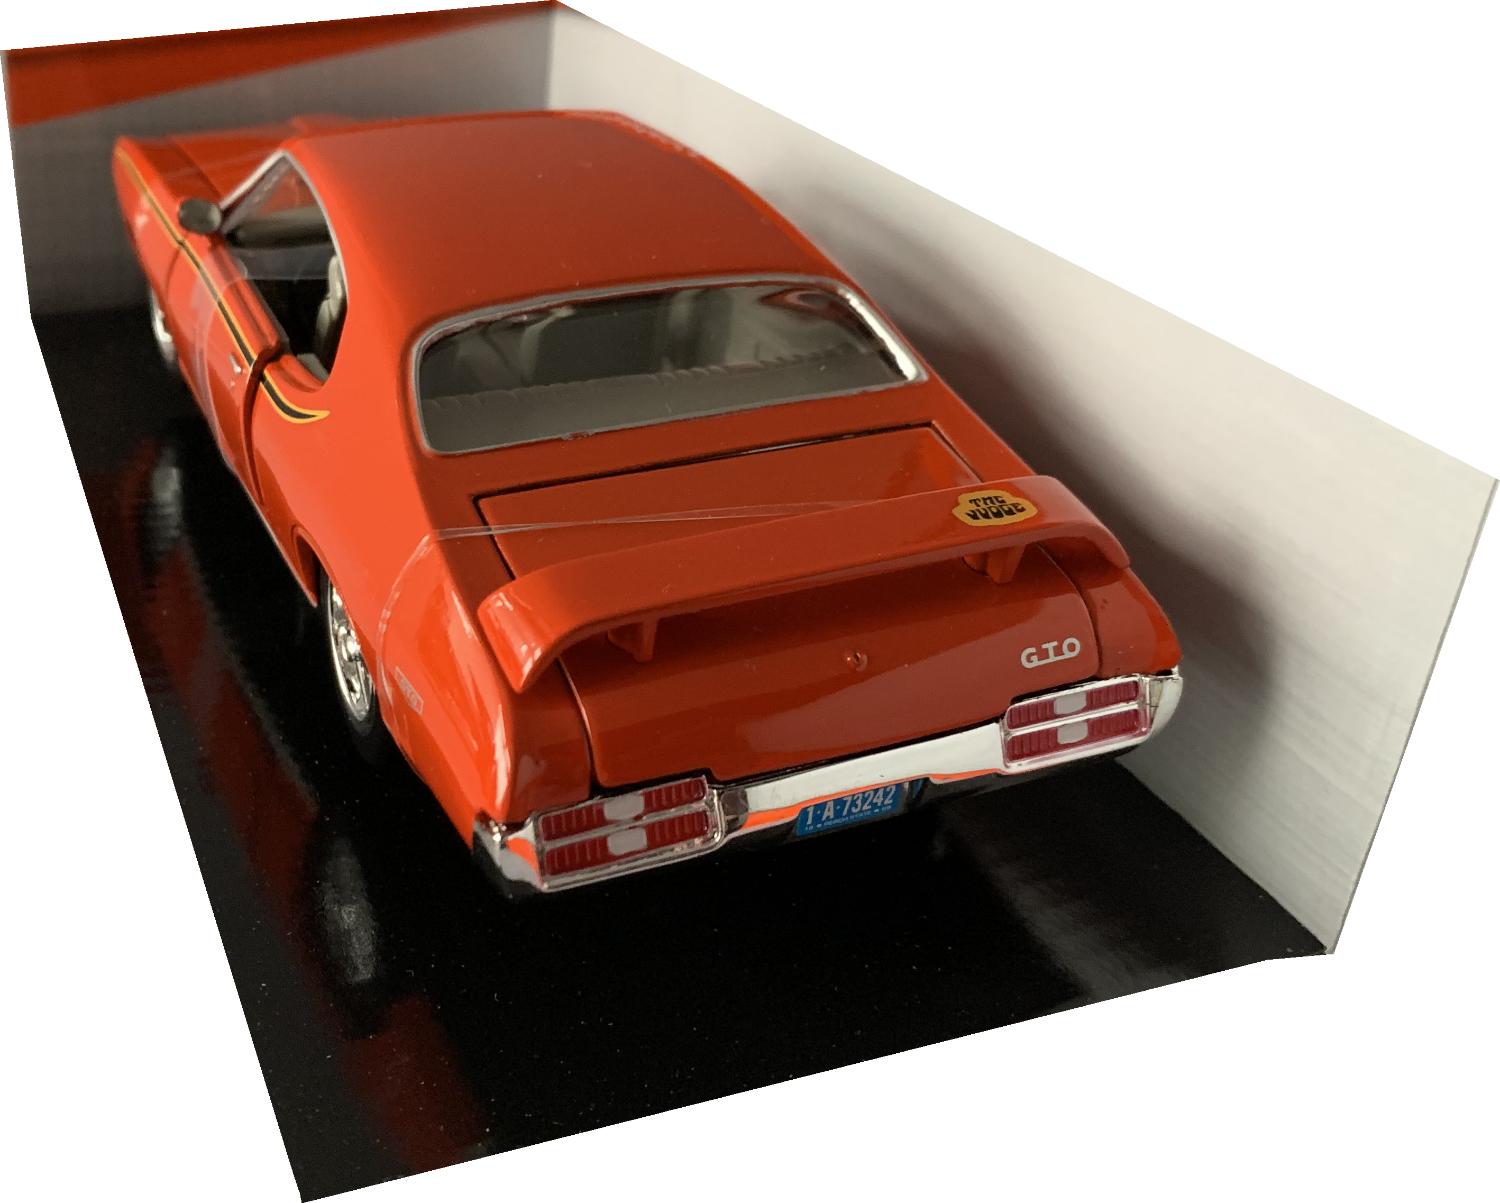 Pontiac GTO Judge 1969 in orange 1:24 scale model from Motormax, MMX73242O